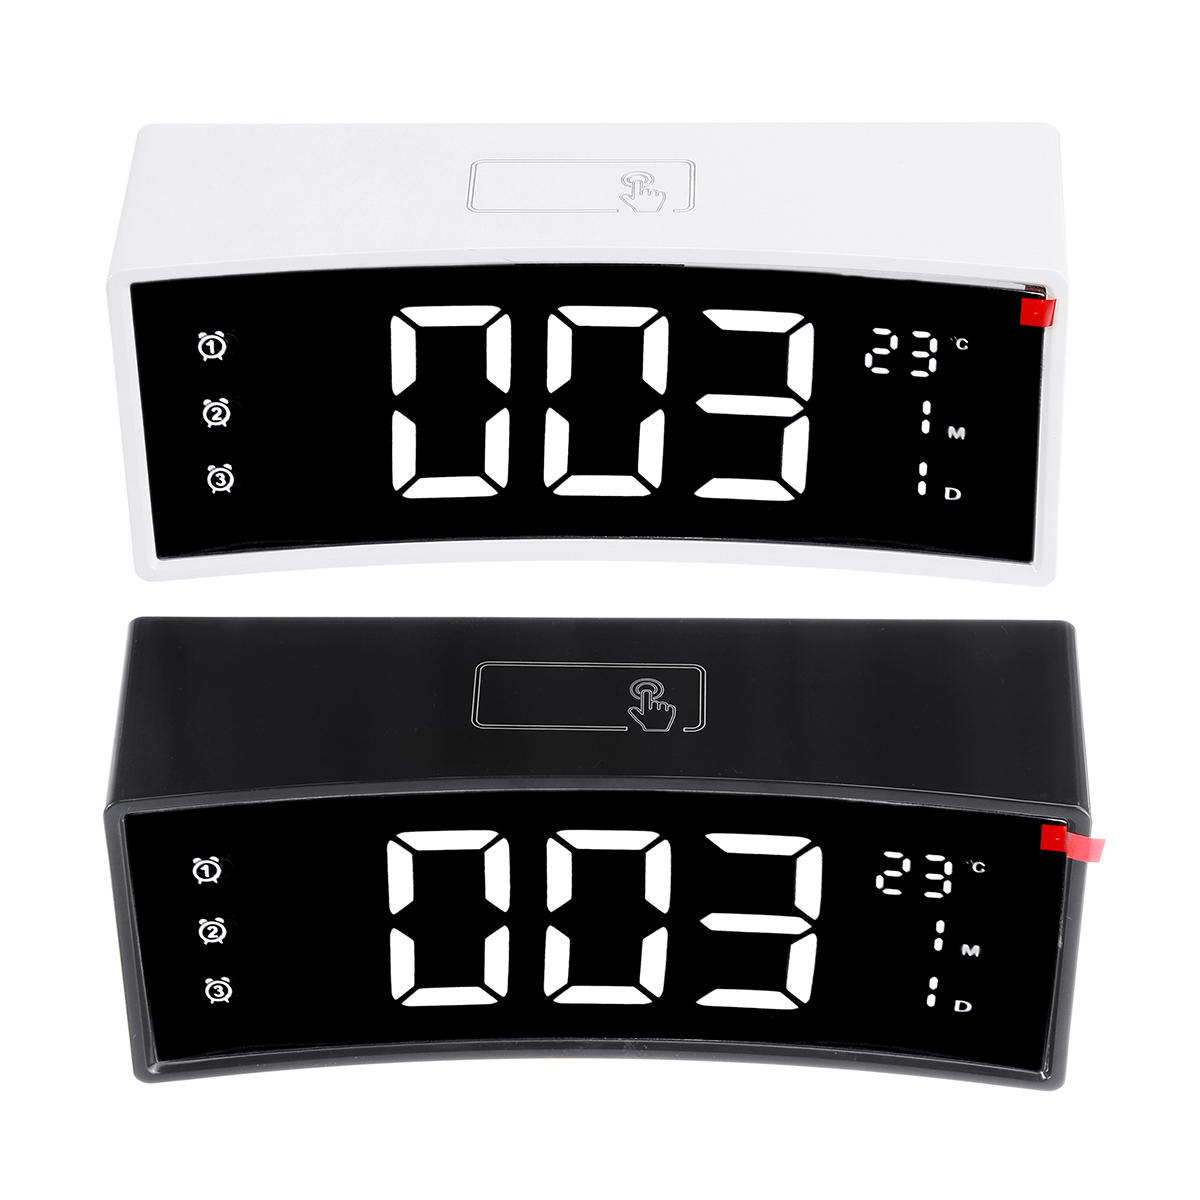 

Дуга LED Сигнализация Часы Цифровой Snooze Touch Control Таблица Часы Дневная температура Дисплей Украшение дома